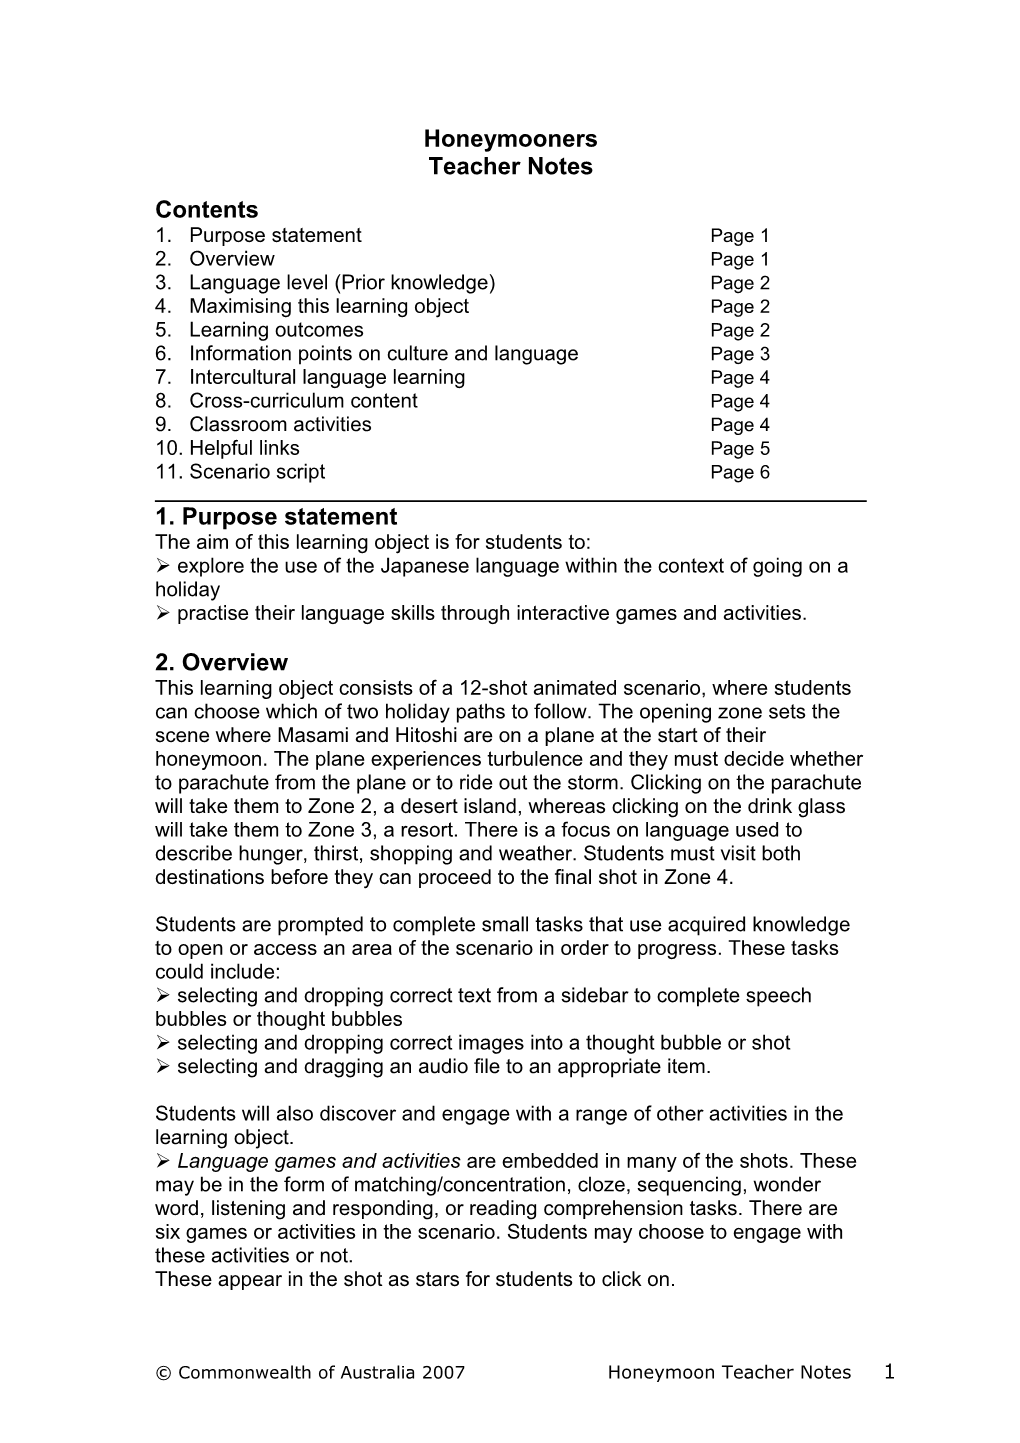 3. Language Level (Prior Knowledge)Page 2